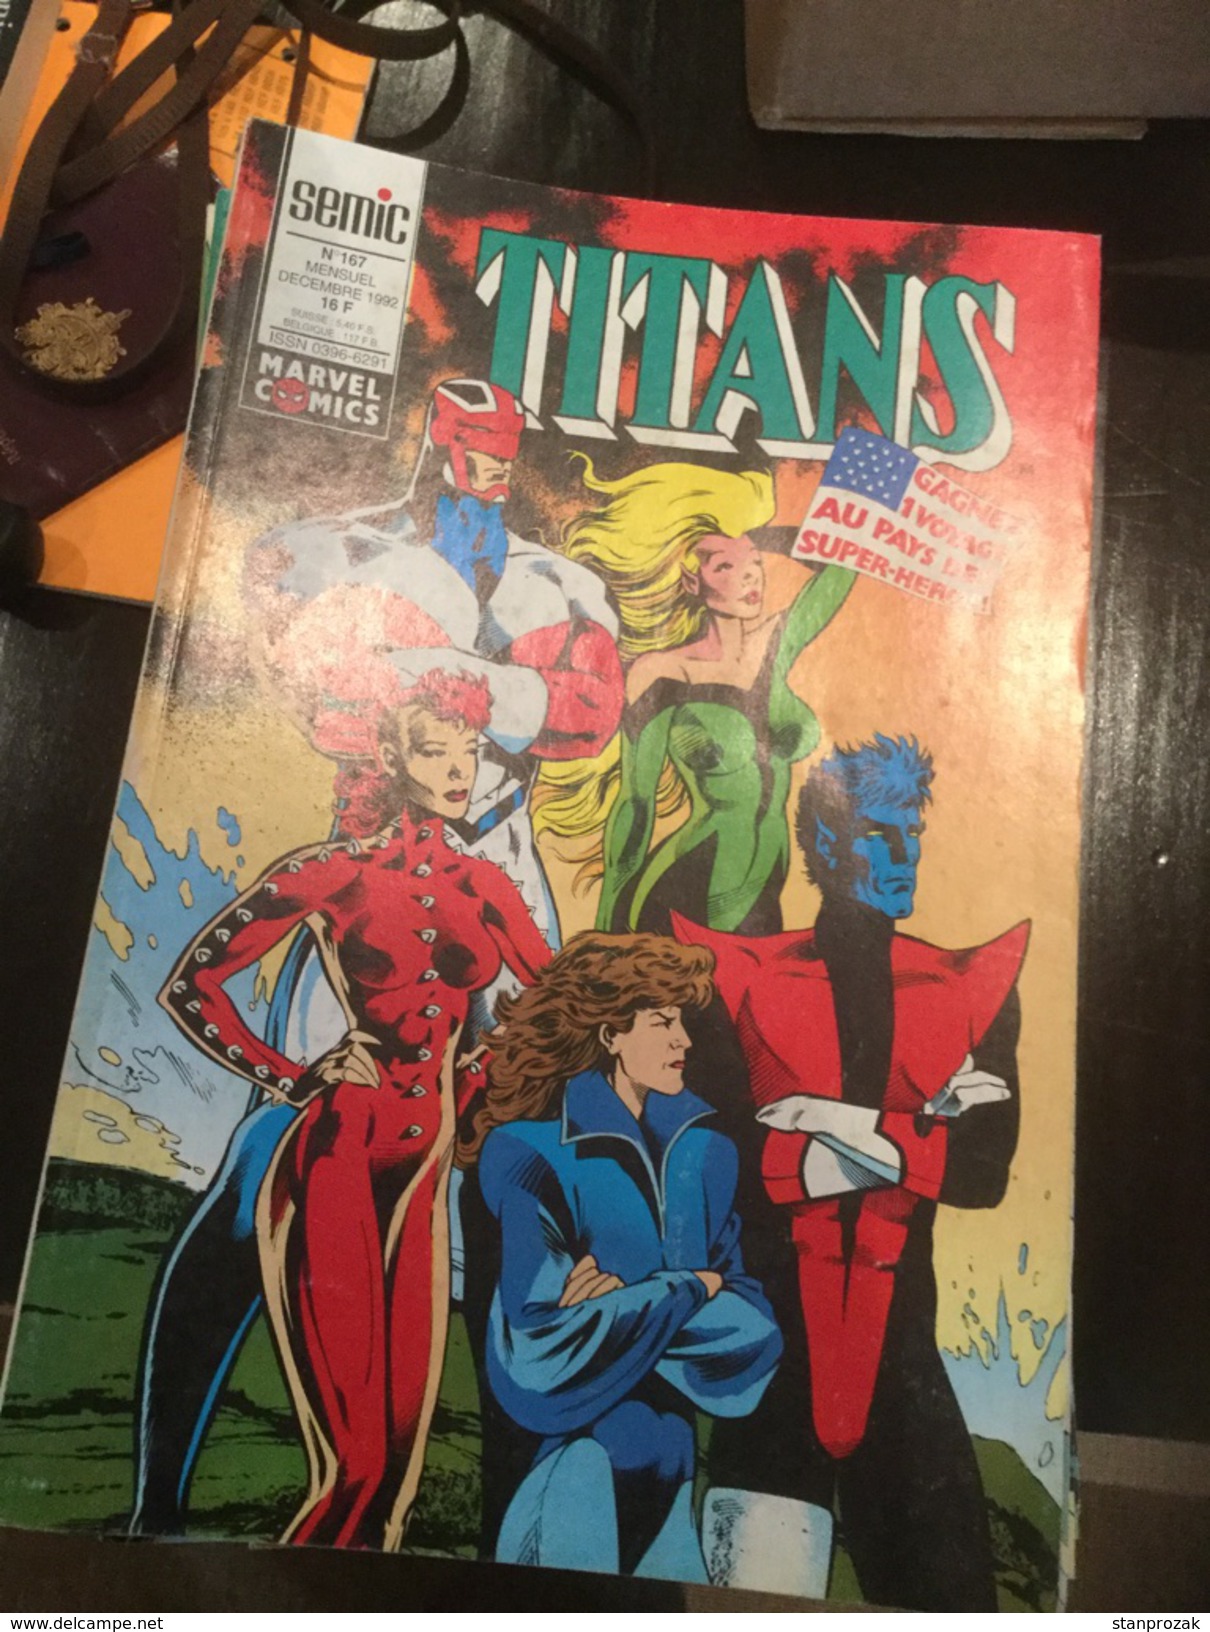 Titans 168 - Titans